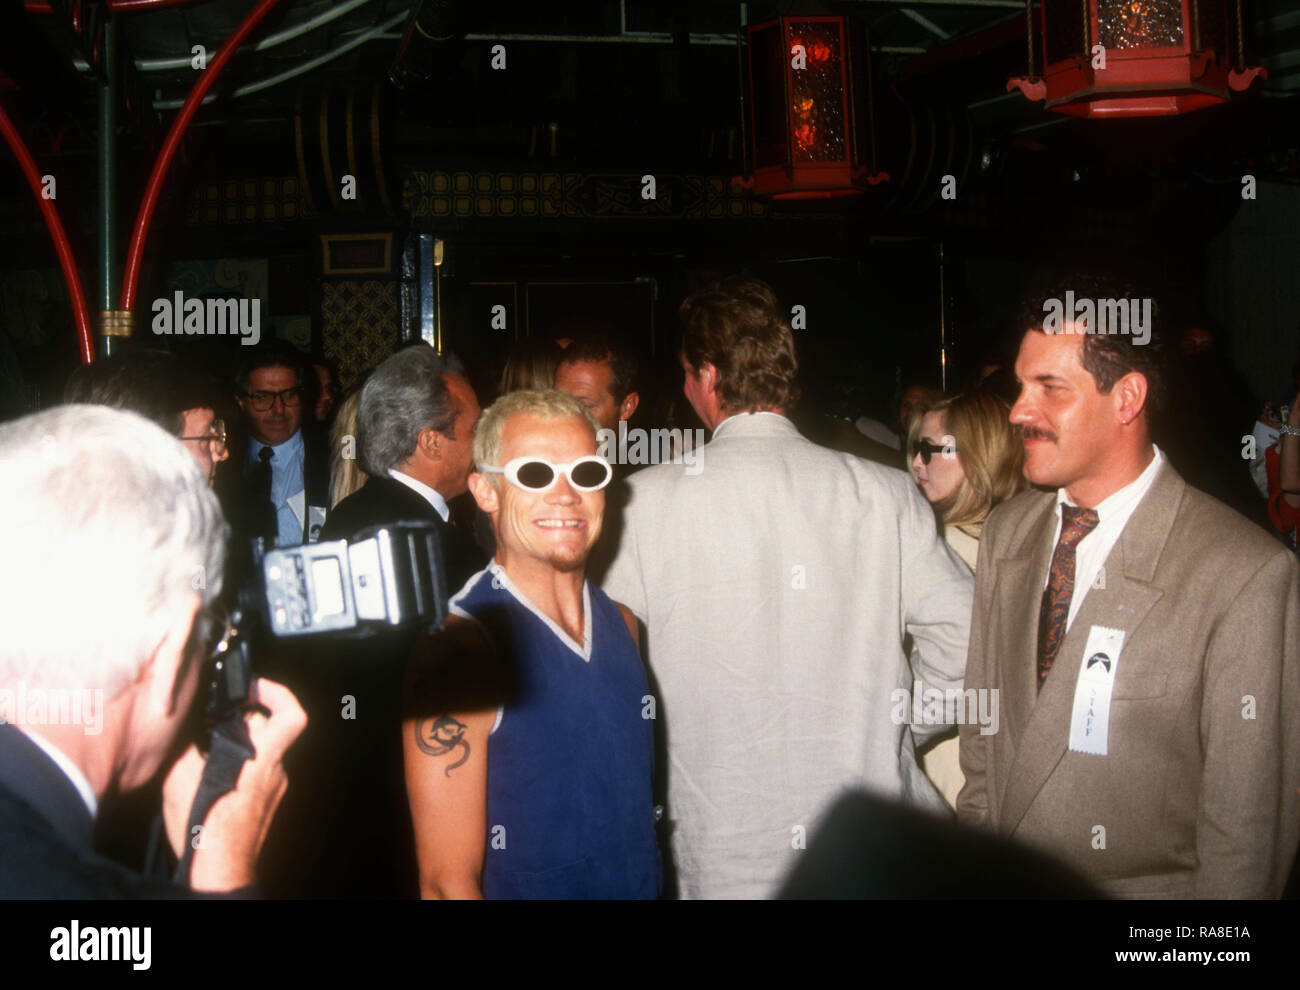 HOLLYWOOD, CA - 19. Juli: Musiker Flea von den Red Hot Chili Peppers sorgt sich Paramount Pictures "coneheads" Premiere am 19. Juli 1993 bei Mann Chinese Theatre in Hollywood, Kalifornien. Foto von Barry King/Alamy Stock Foto Stockfoto